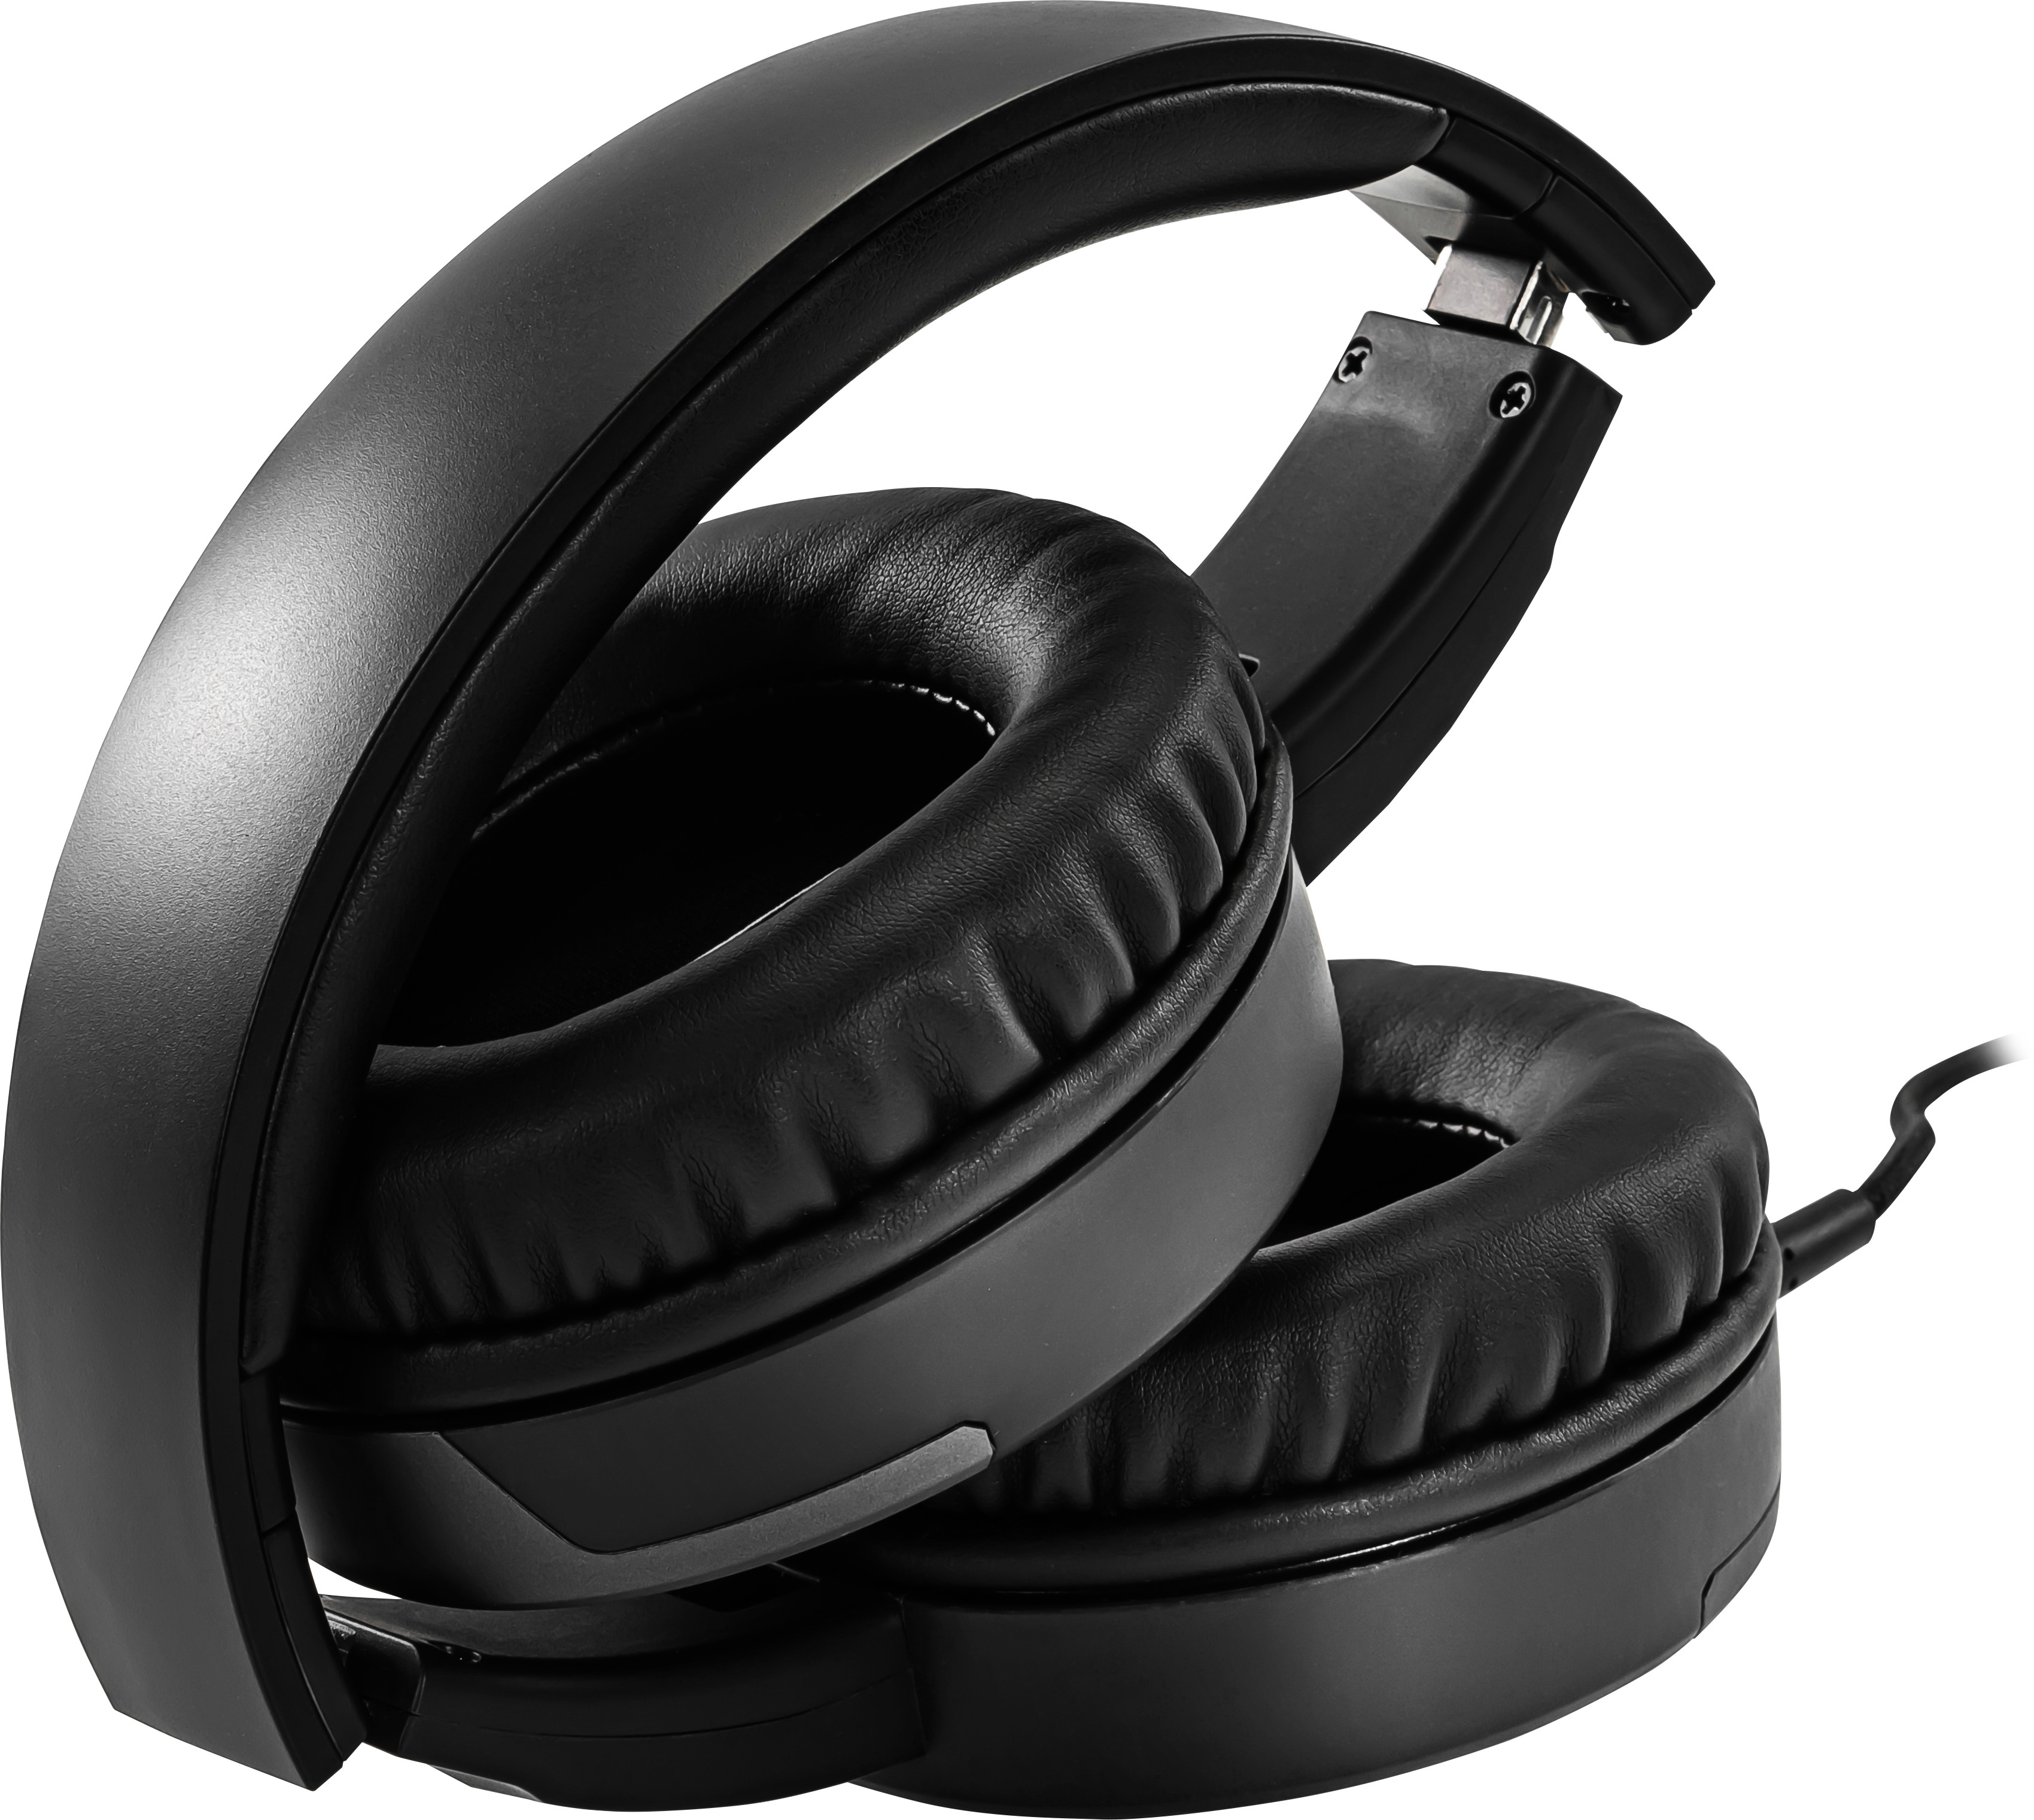 MSI GH30, Over-ear Rot Schwarz/ Headset Gaming